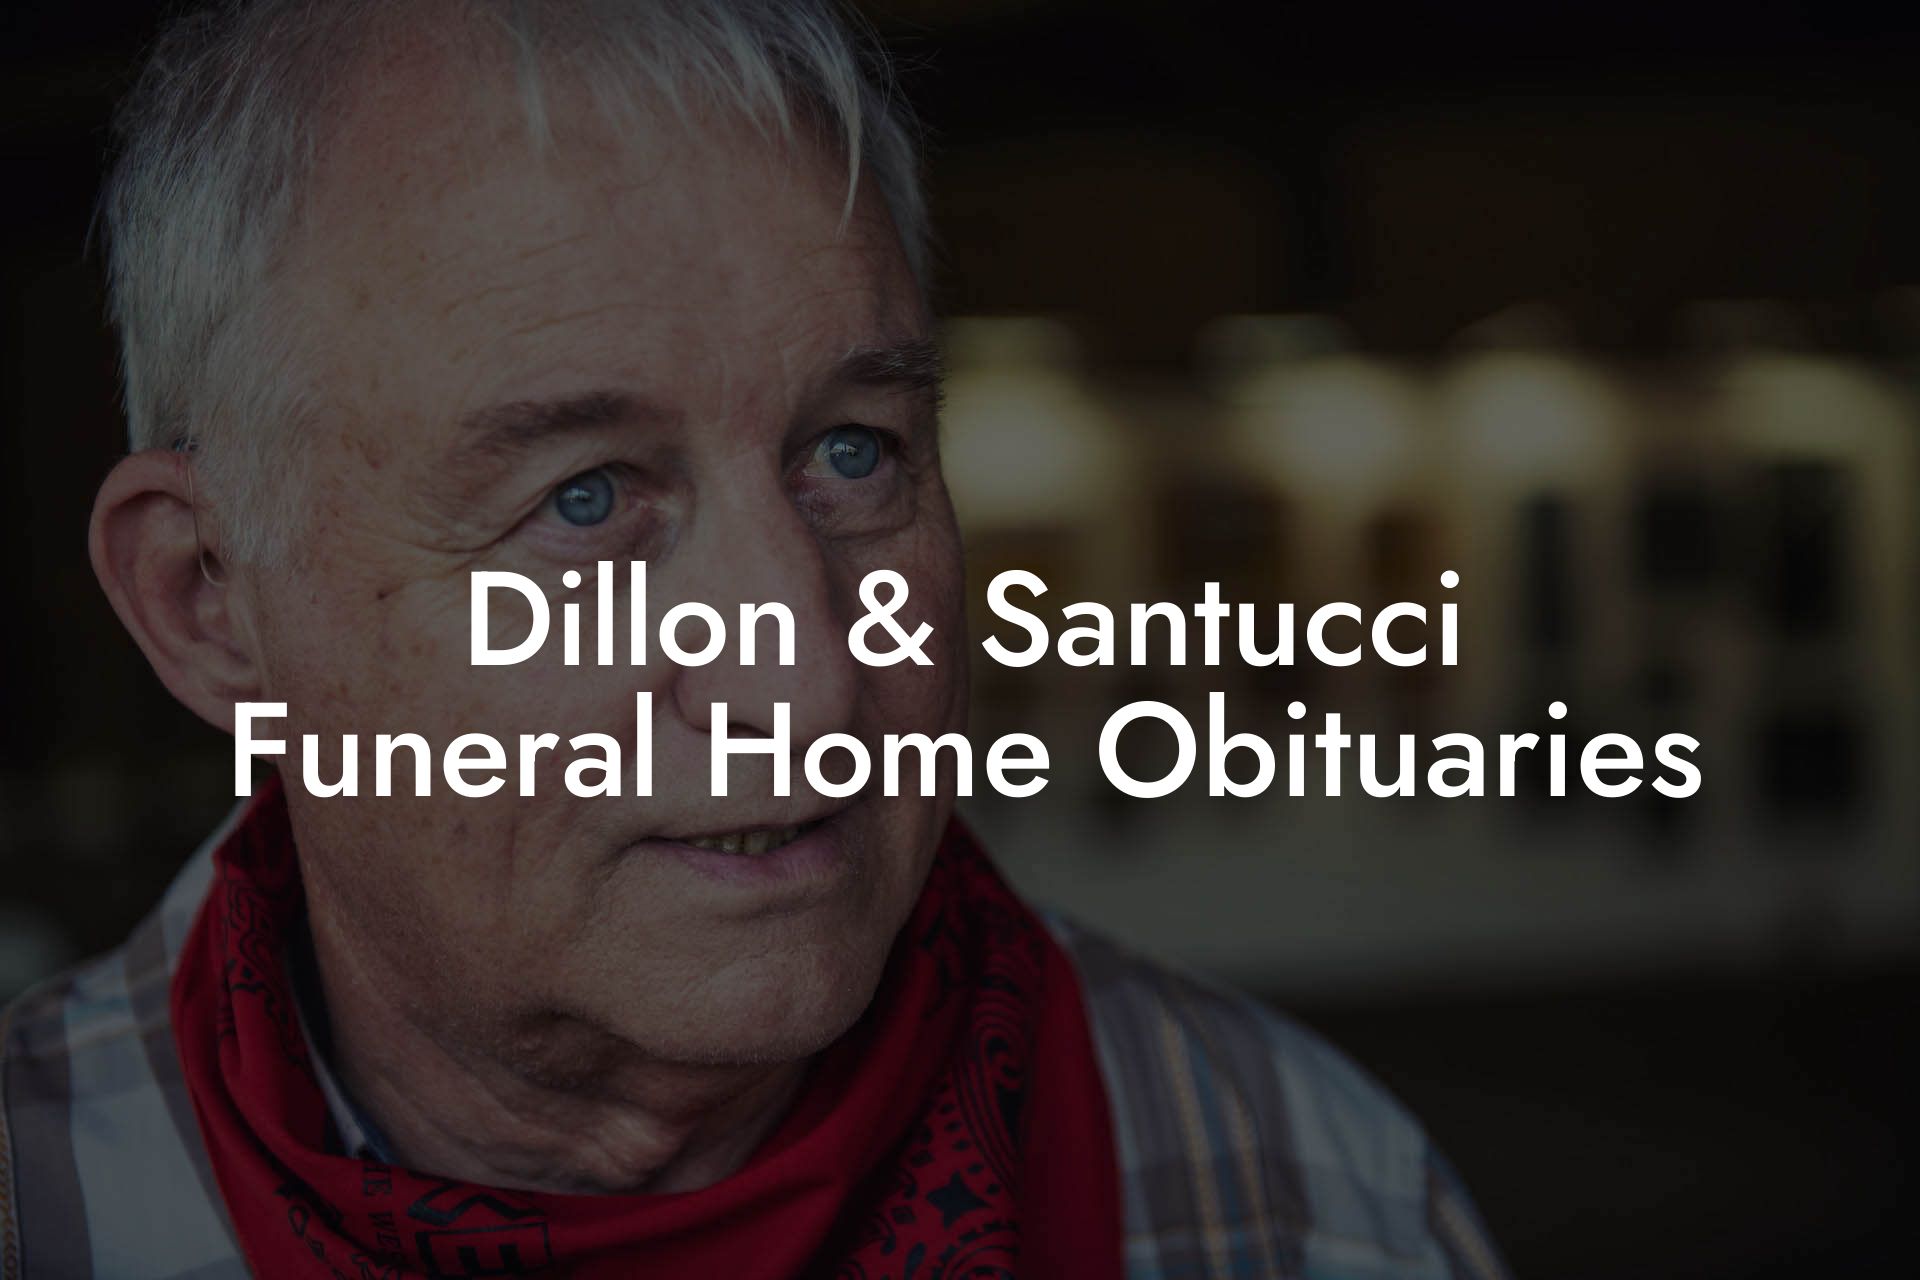 Dillon & Santucci Funeral Home Obituaries